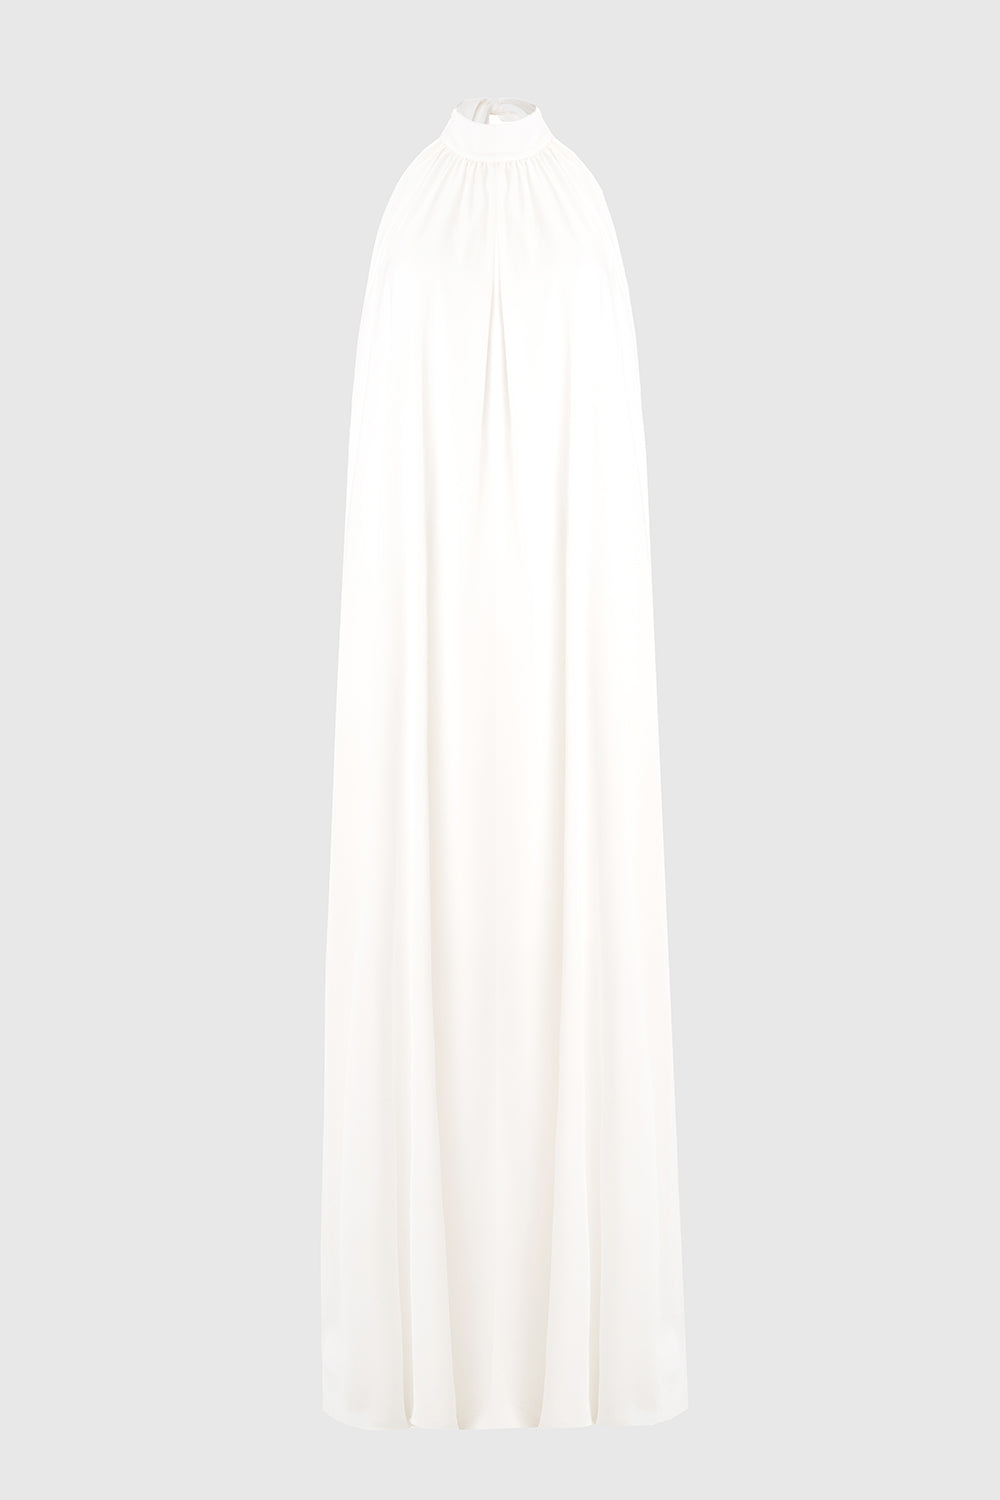 Pam Satin White Halter Maxi Dress